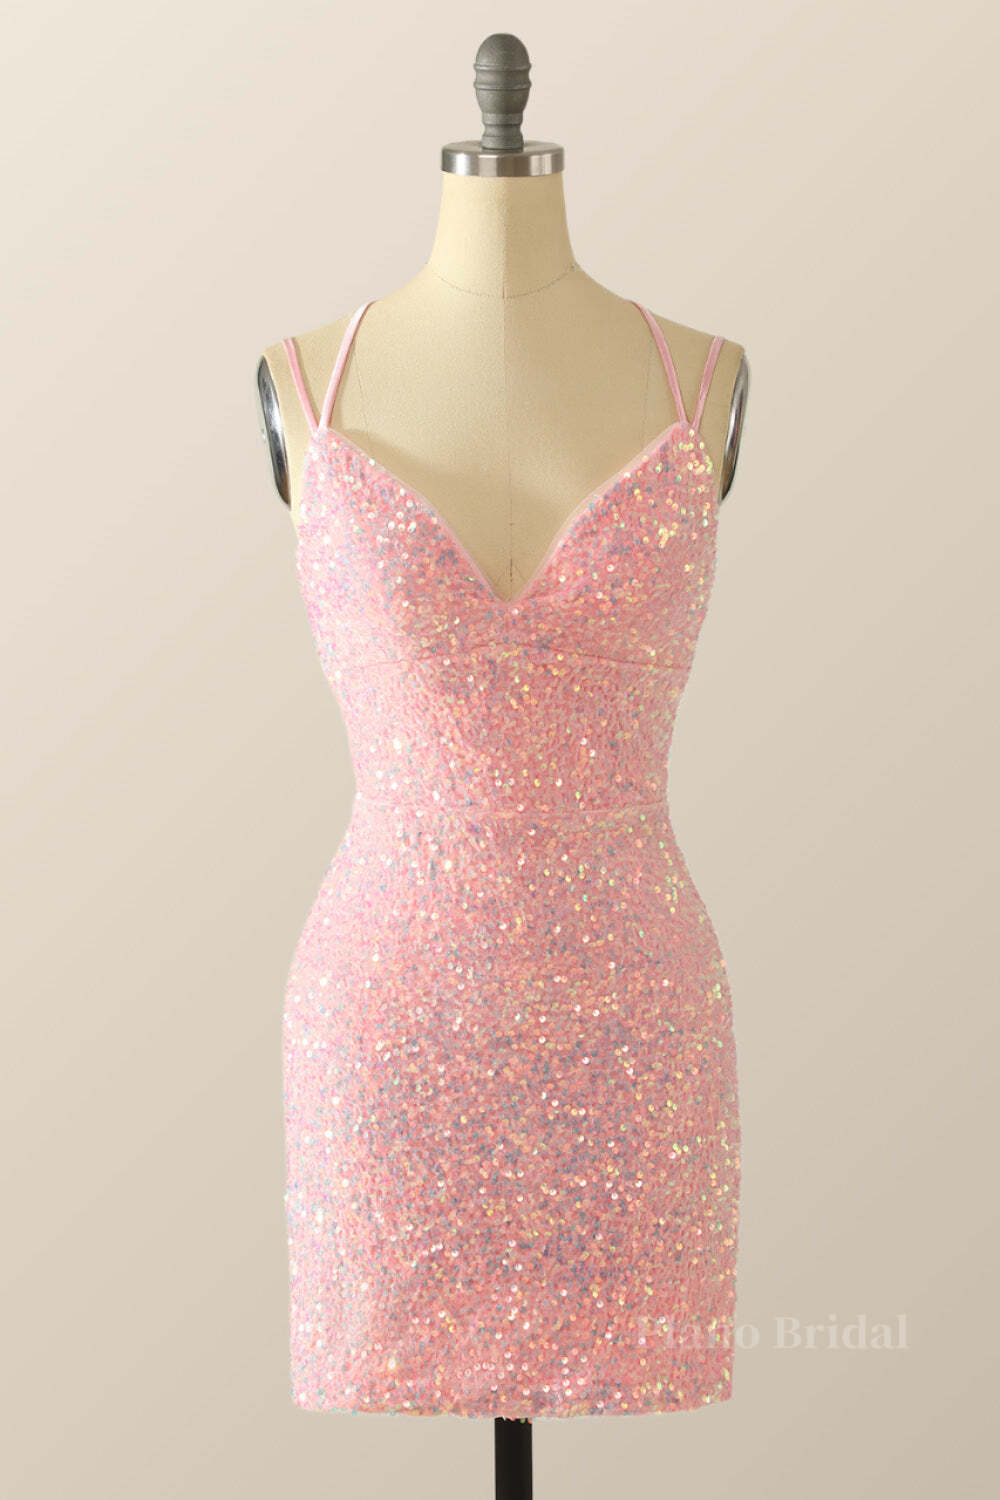 Double Straps Pink Sequin Bodycon Mini Dress